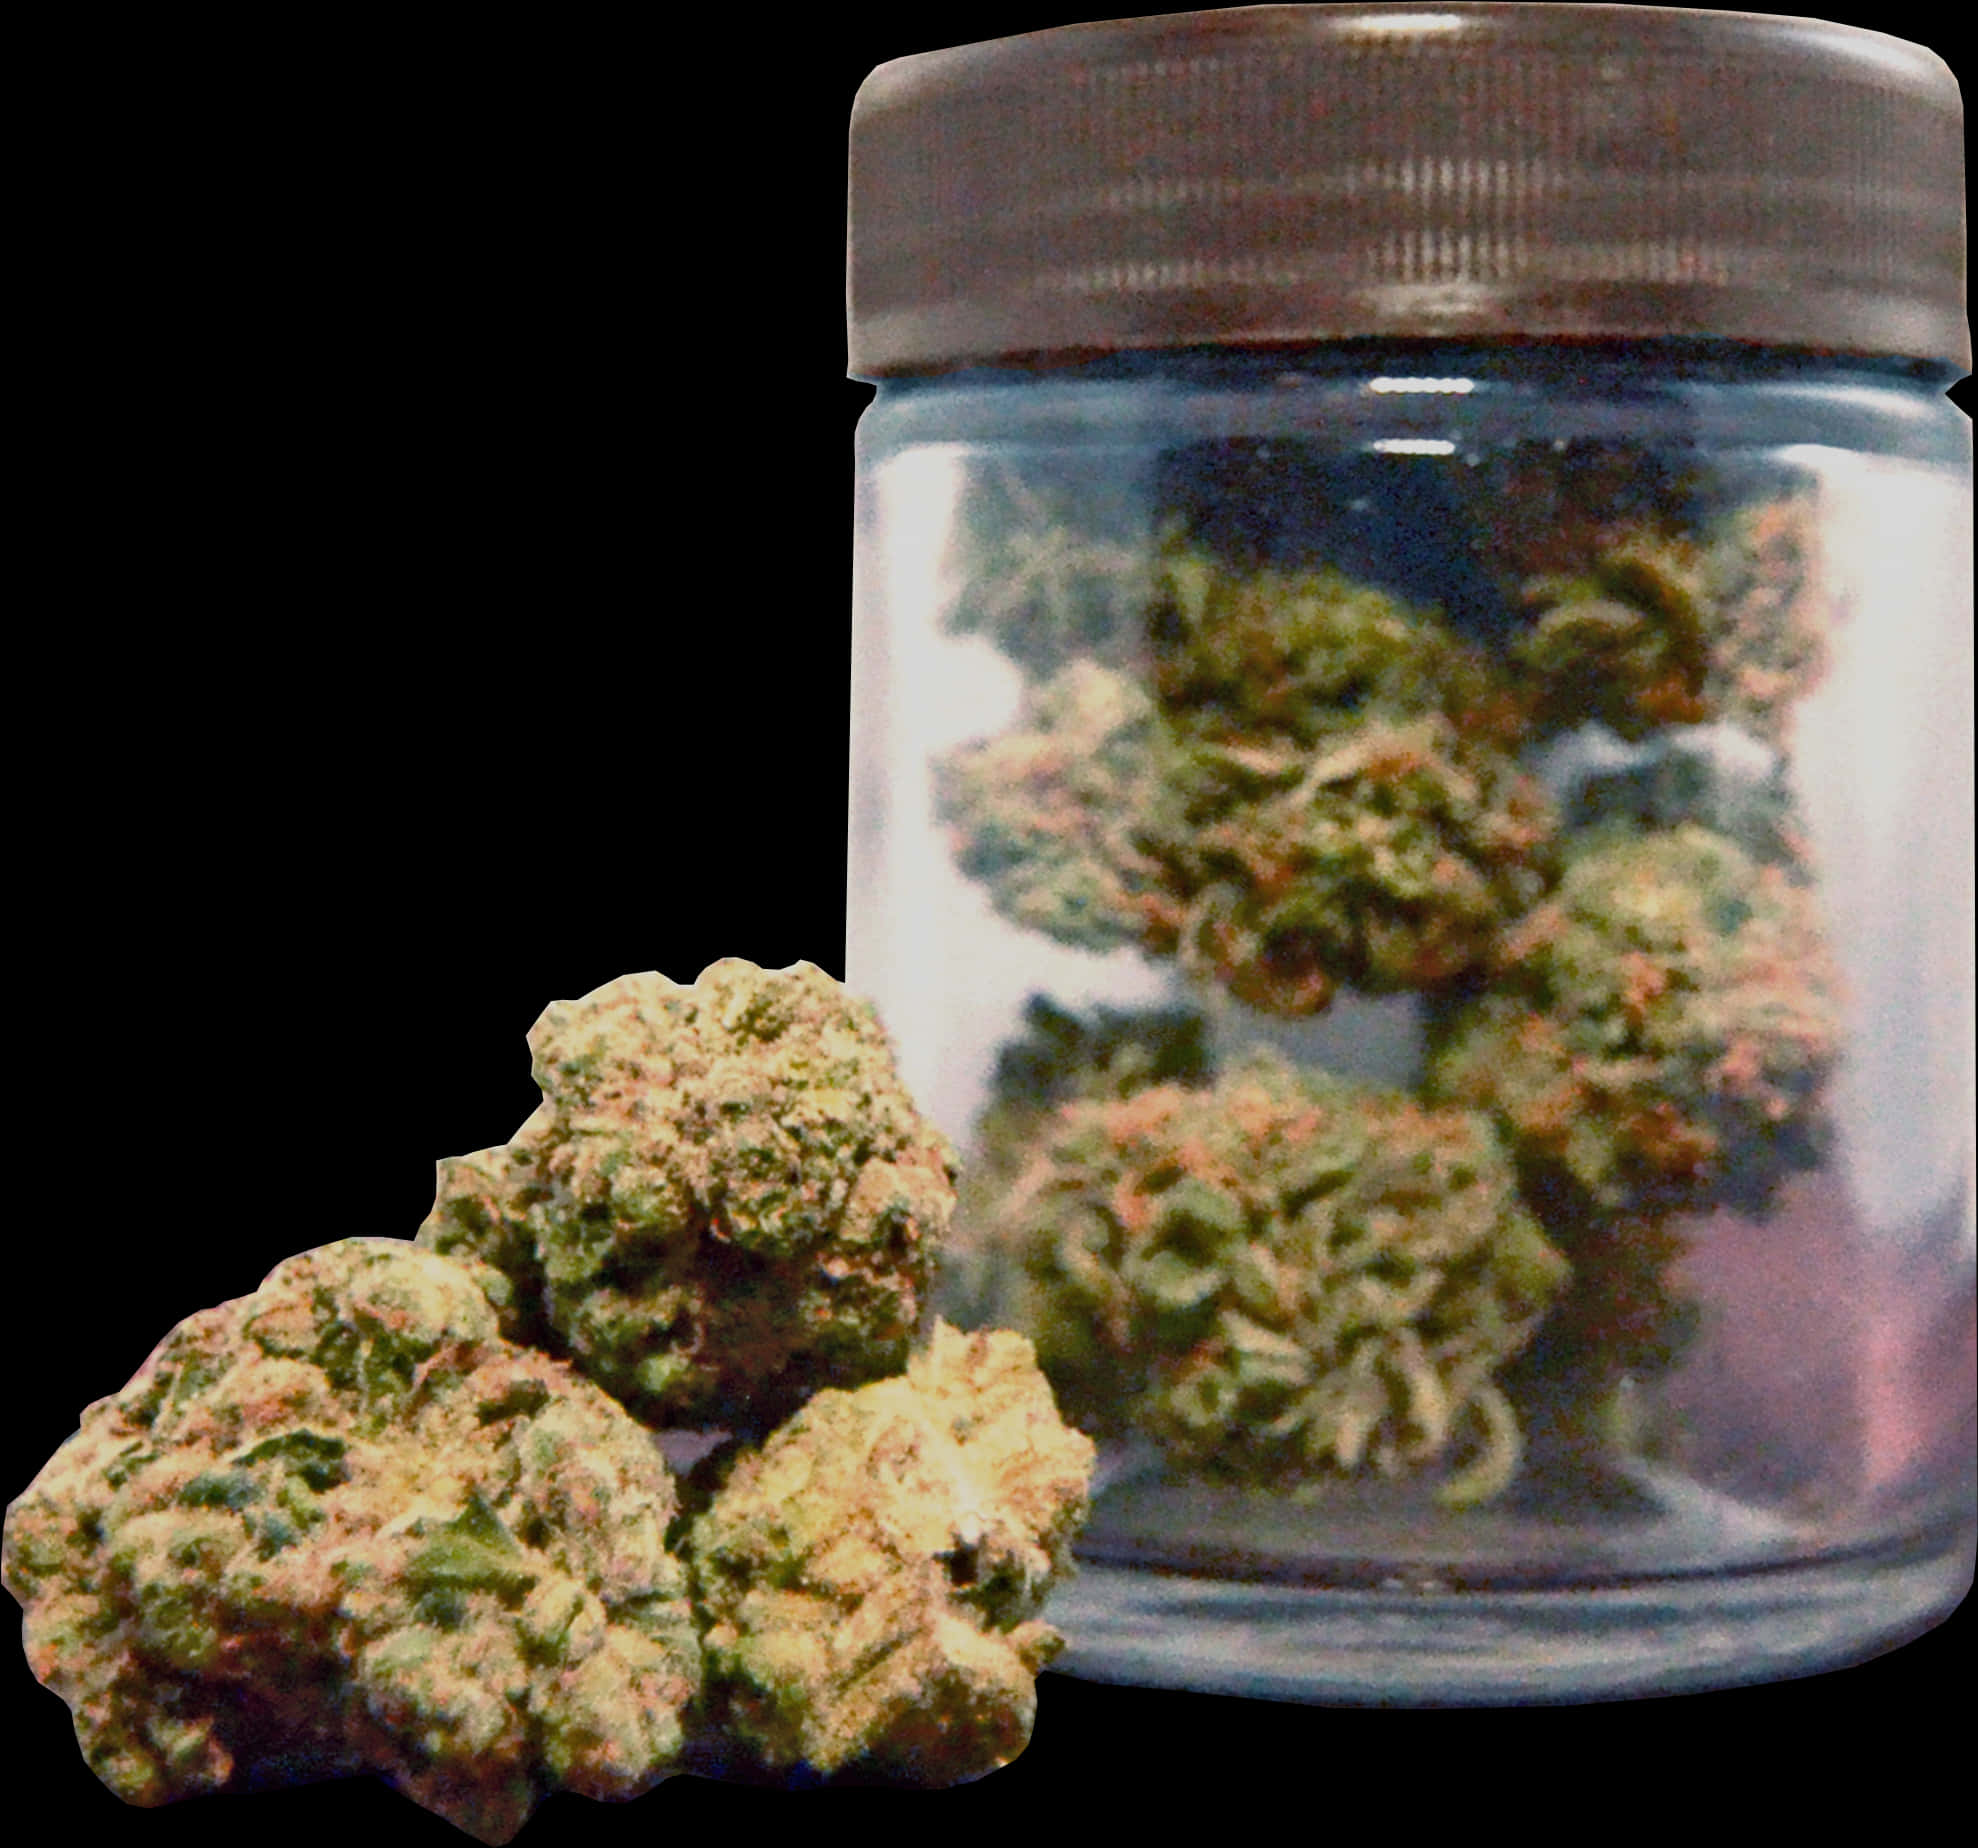 A Jar Of Marijuana Buds